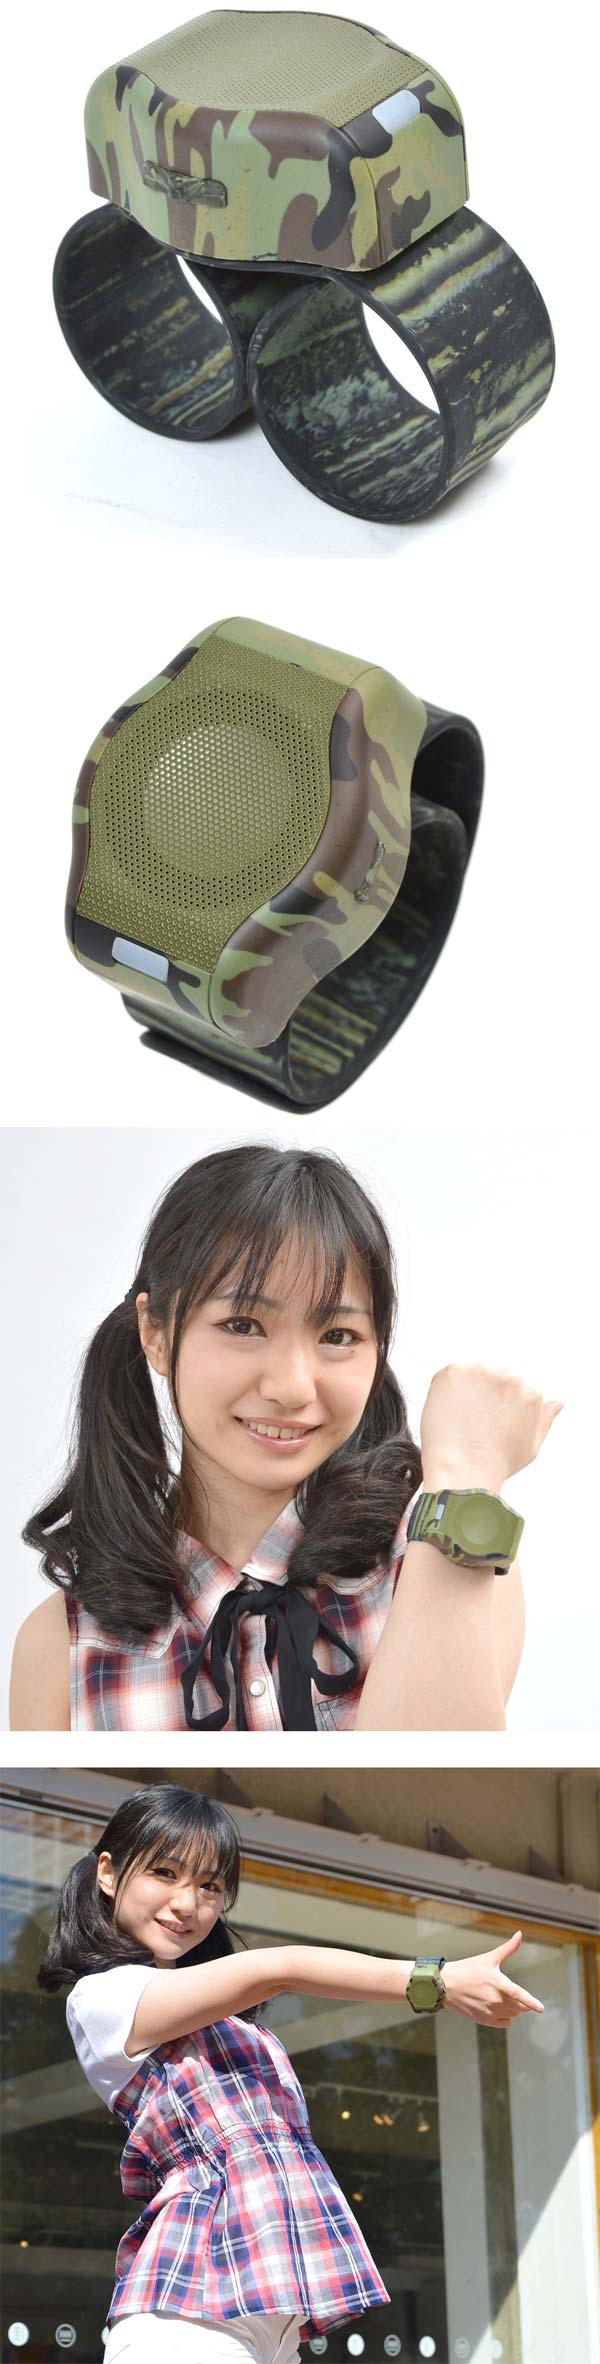 Thanko демонстрирует Wristband MP3 Speaker